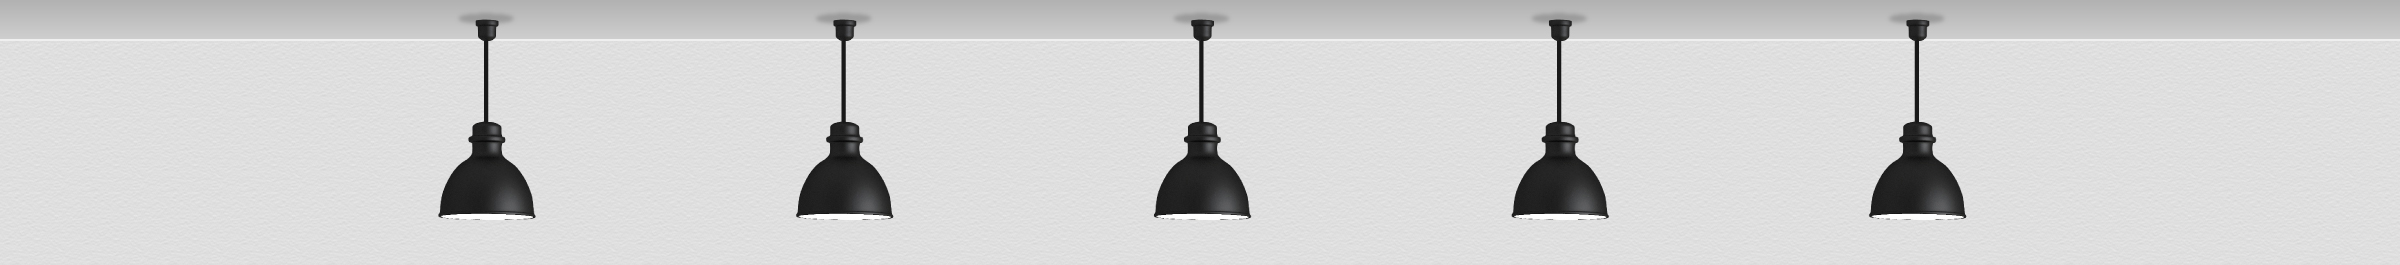 common-img-lamp01